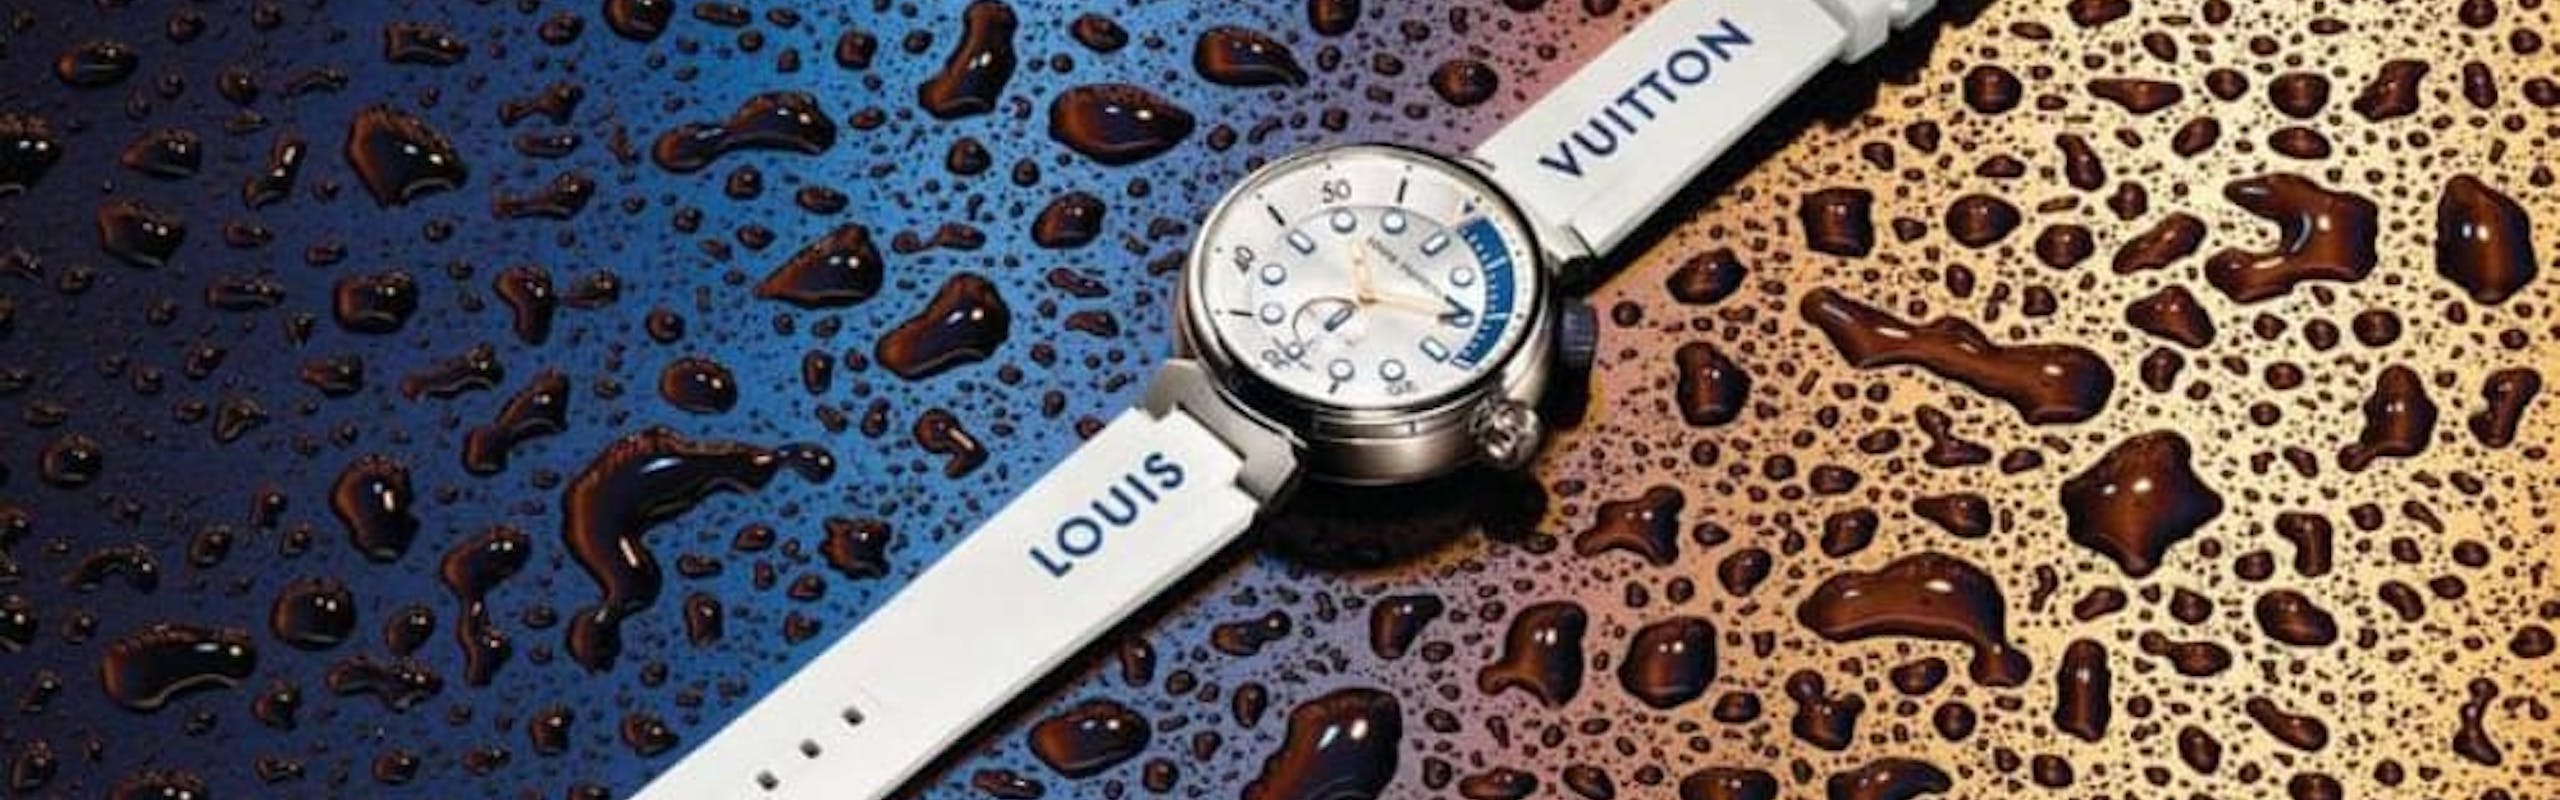 Louis Vuitton: relojoaria